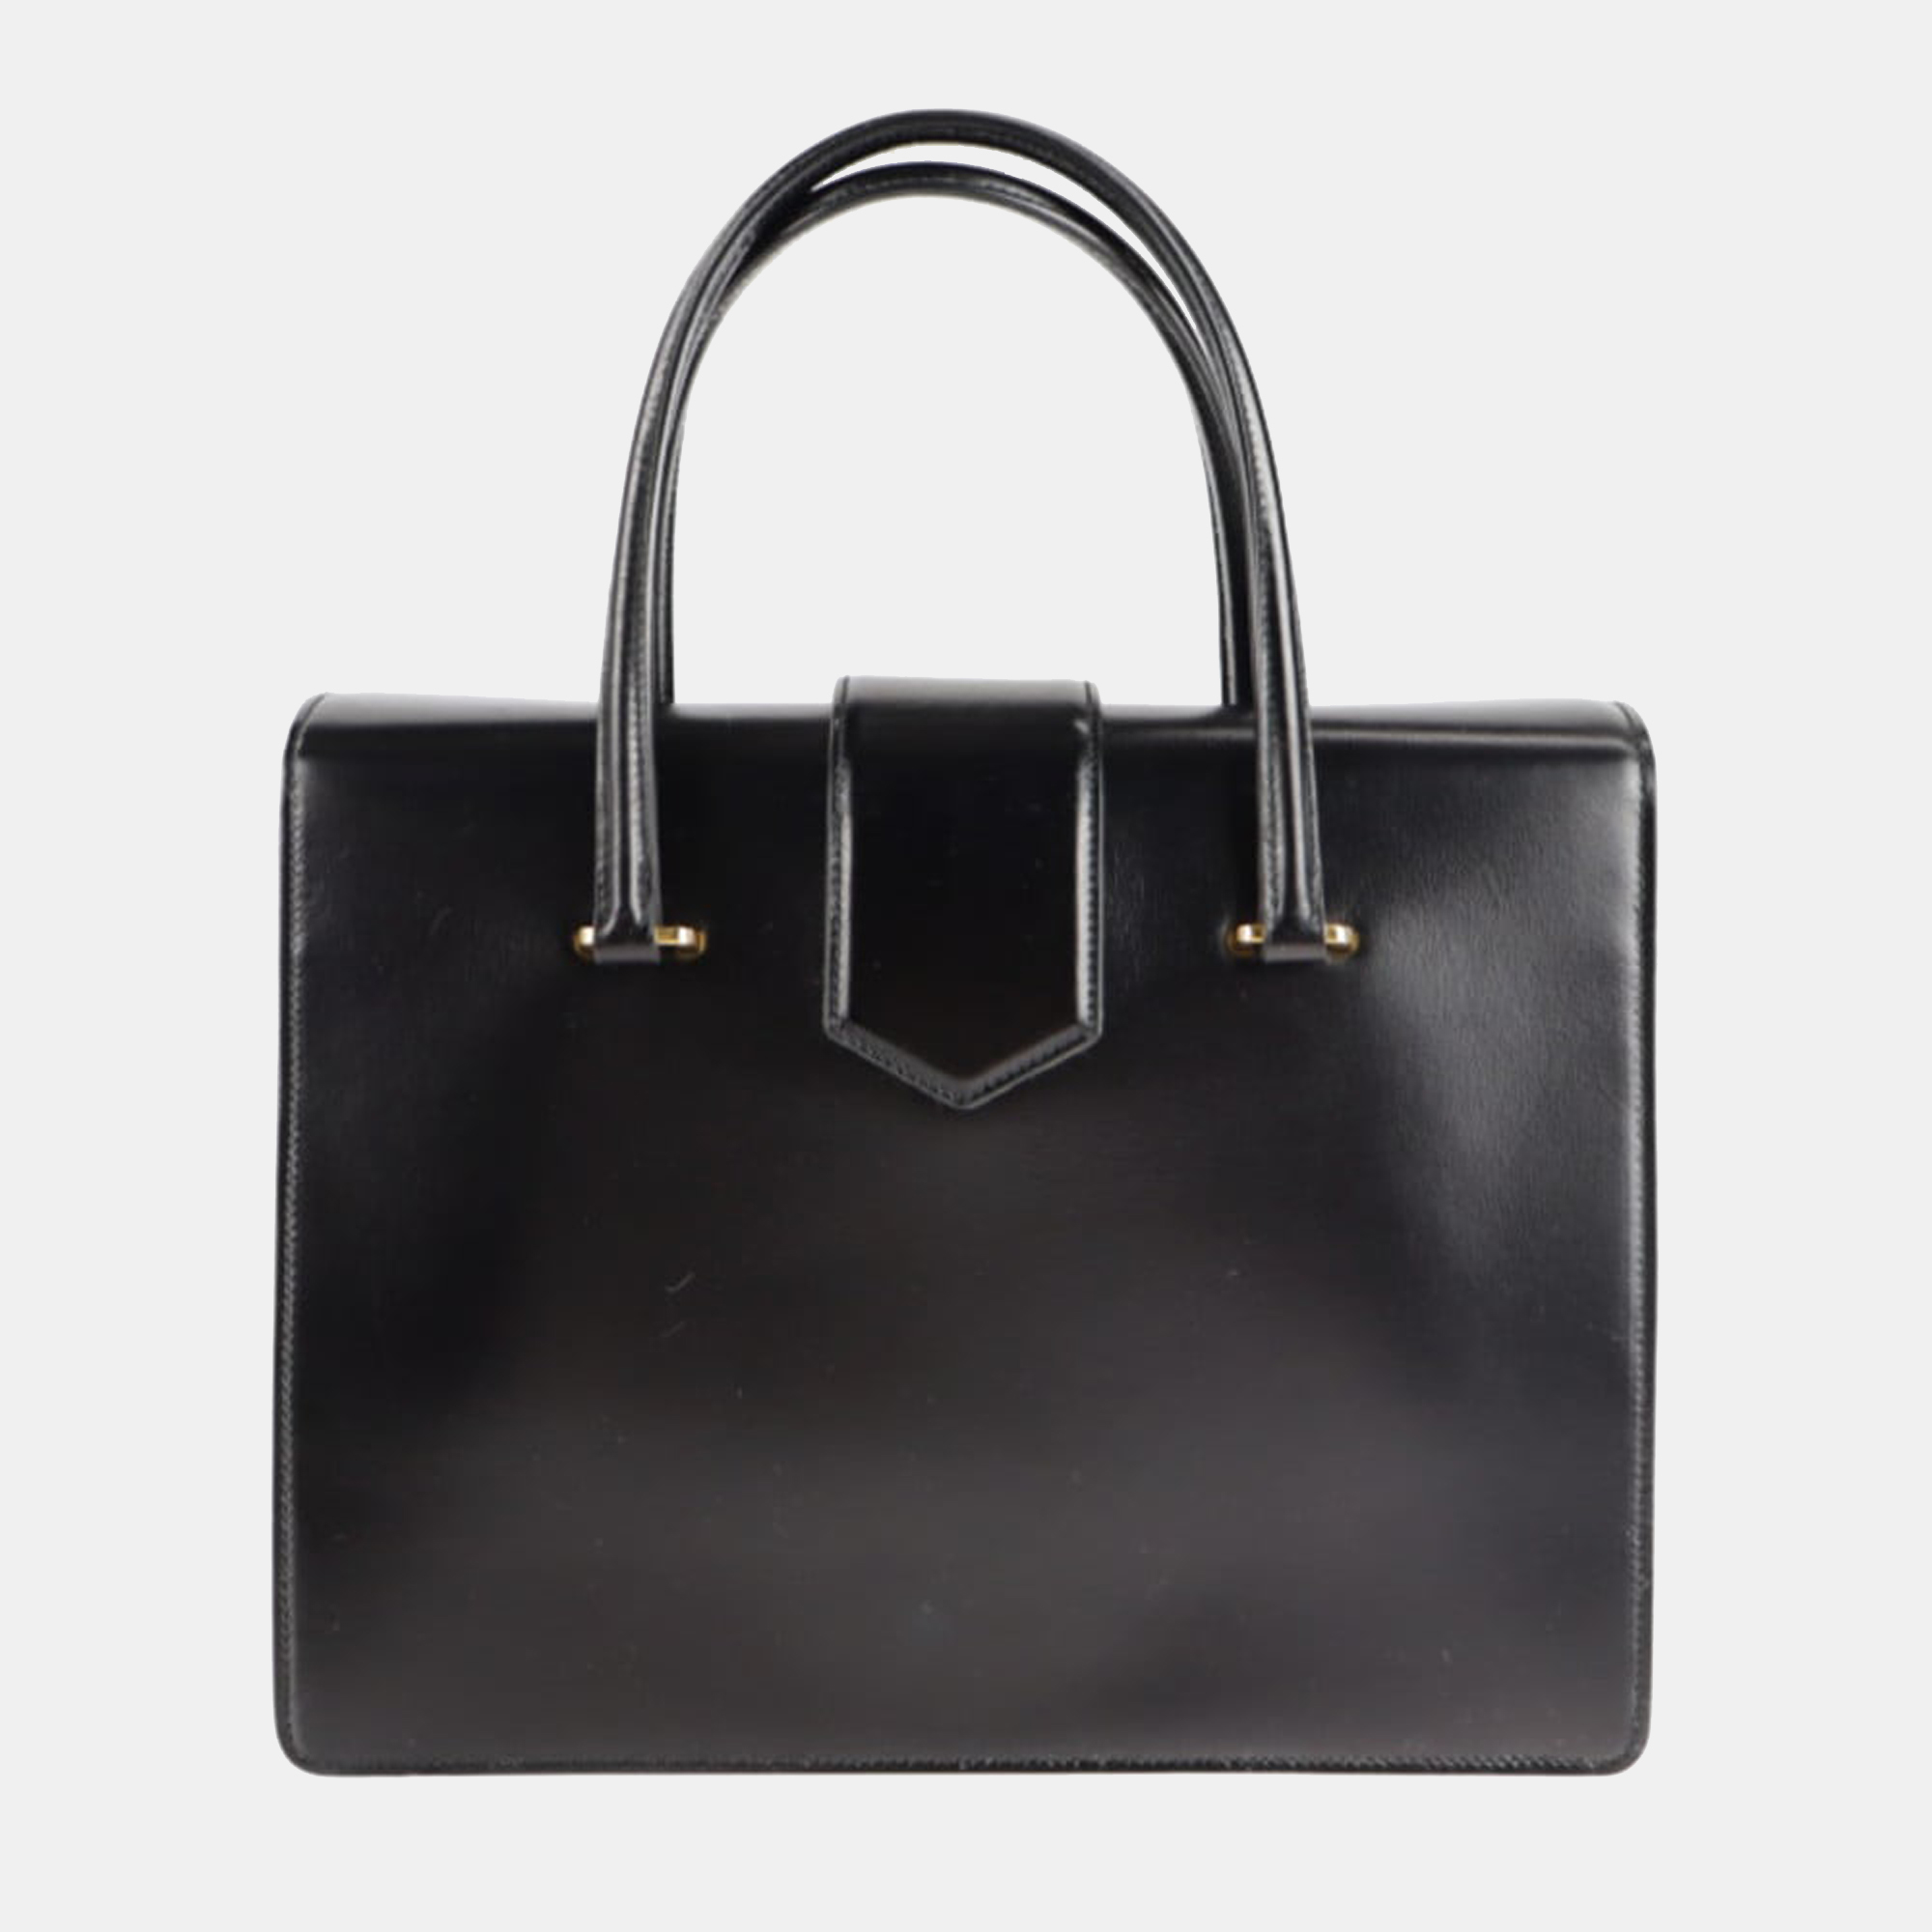 Prada Black Leather Turn-Lock Flap Tote Bag